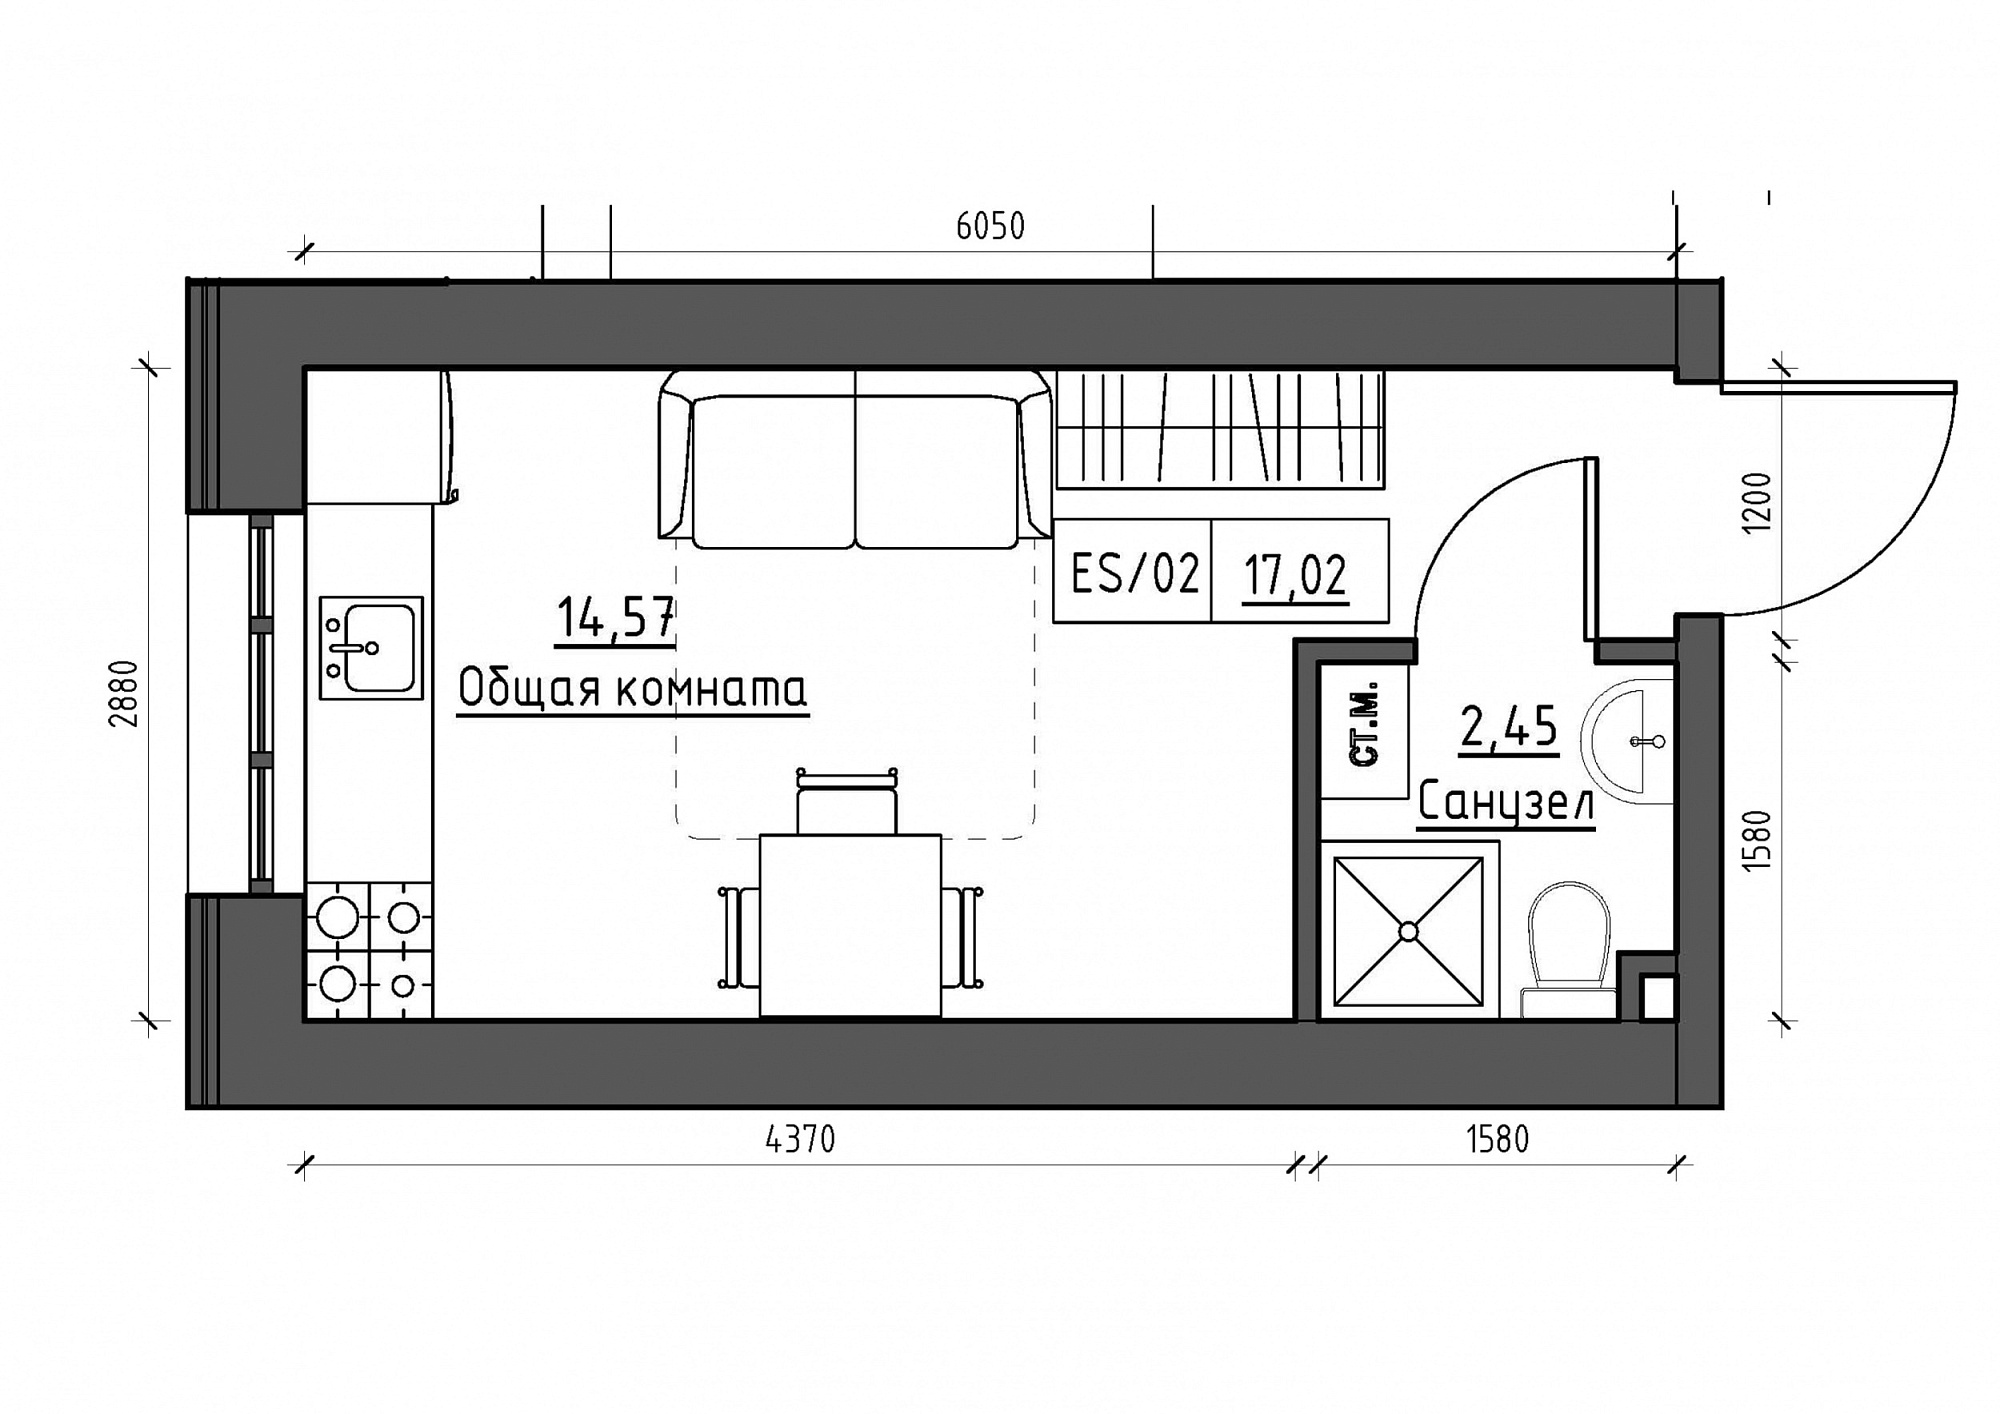 Планировка Smart-квартира площей 17.02м2, KS-011-05/0002.